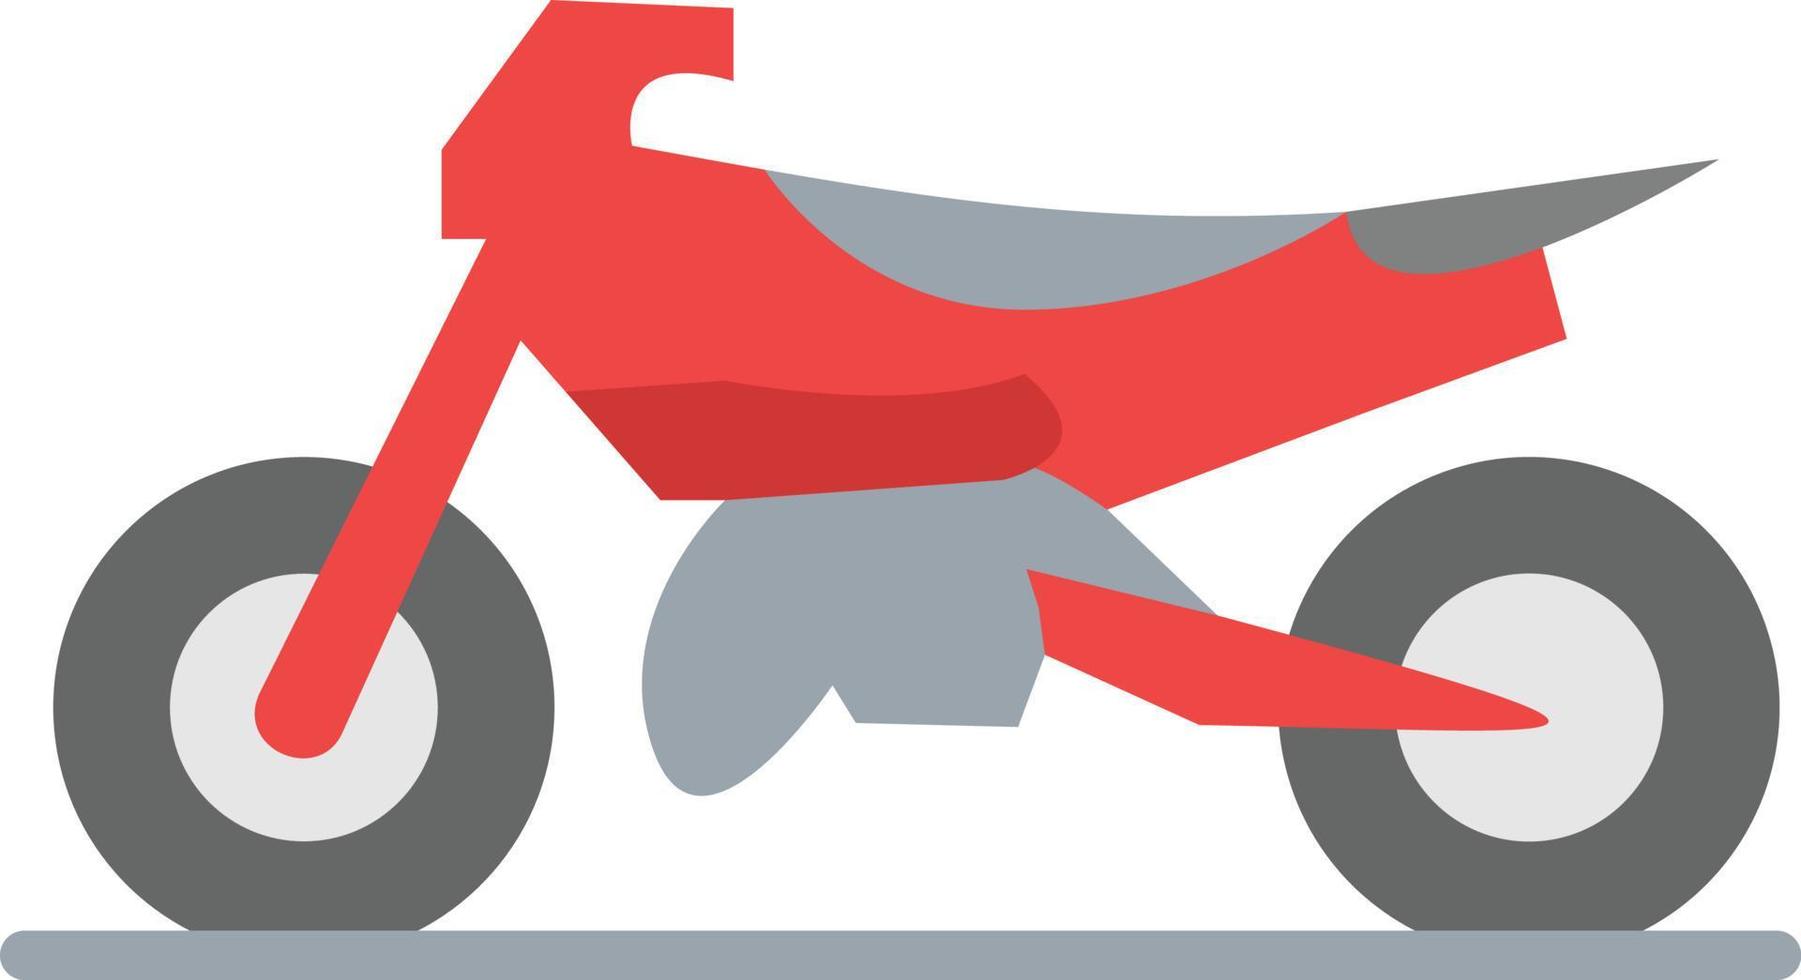 Fahrrad-Flachsymbol vektor